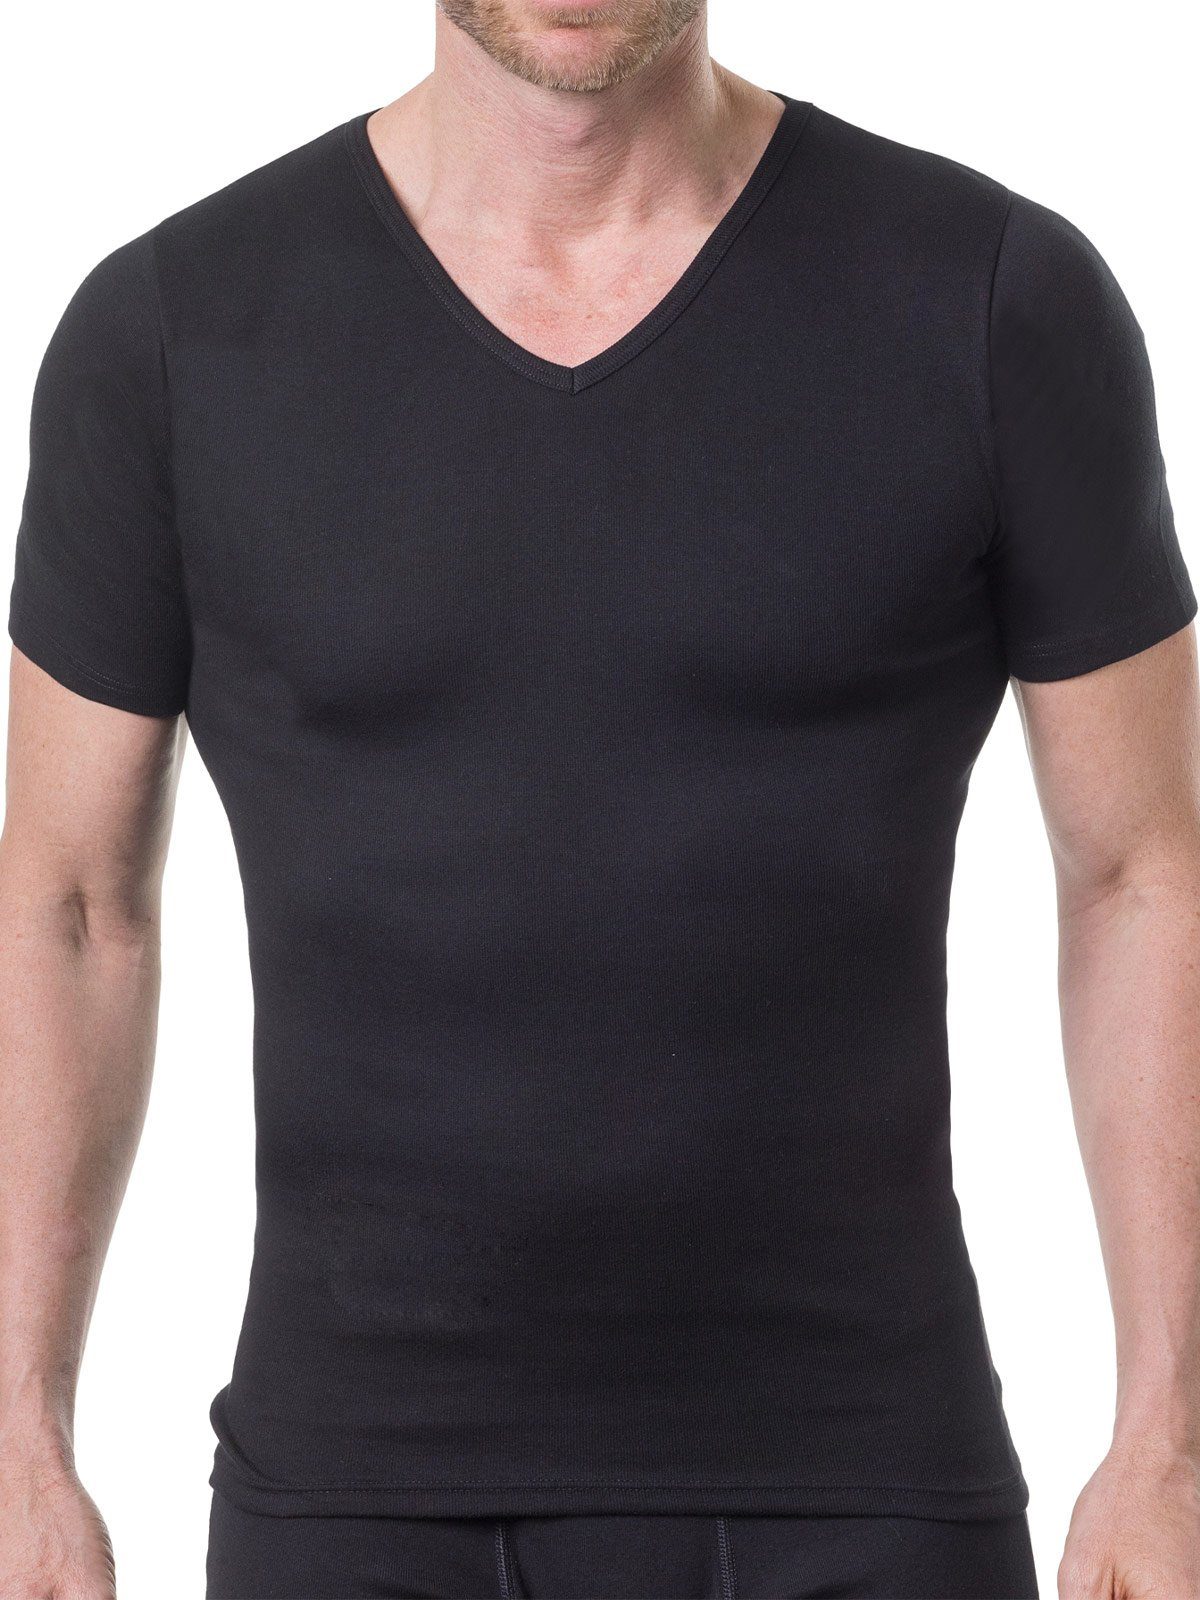 (Spar-Set, weiss 4-St) KUMPF schwarz Markenqualität T-Shirt Cotton Herren 4er Sparpack Unterziehshirt Bio hohe